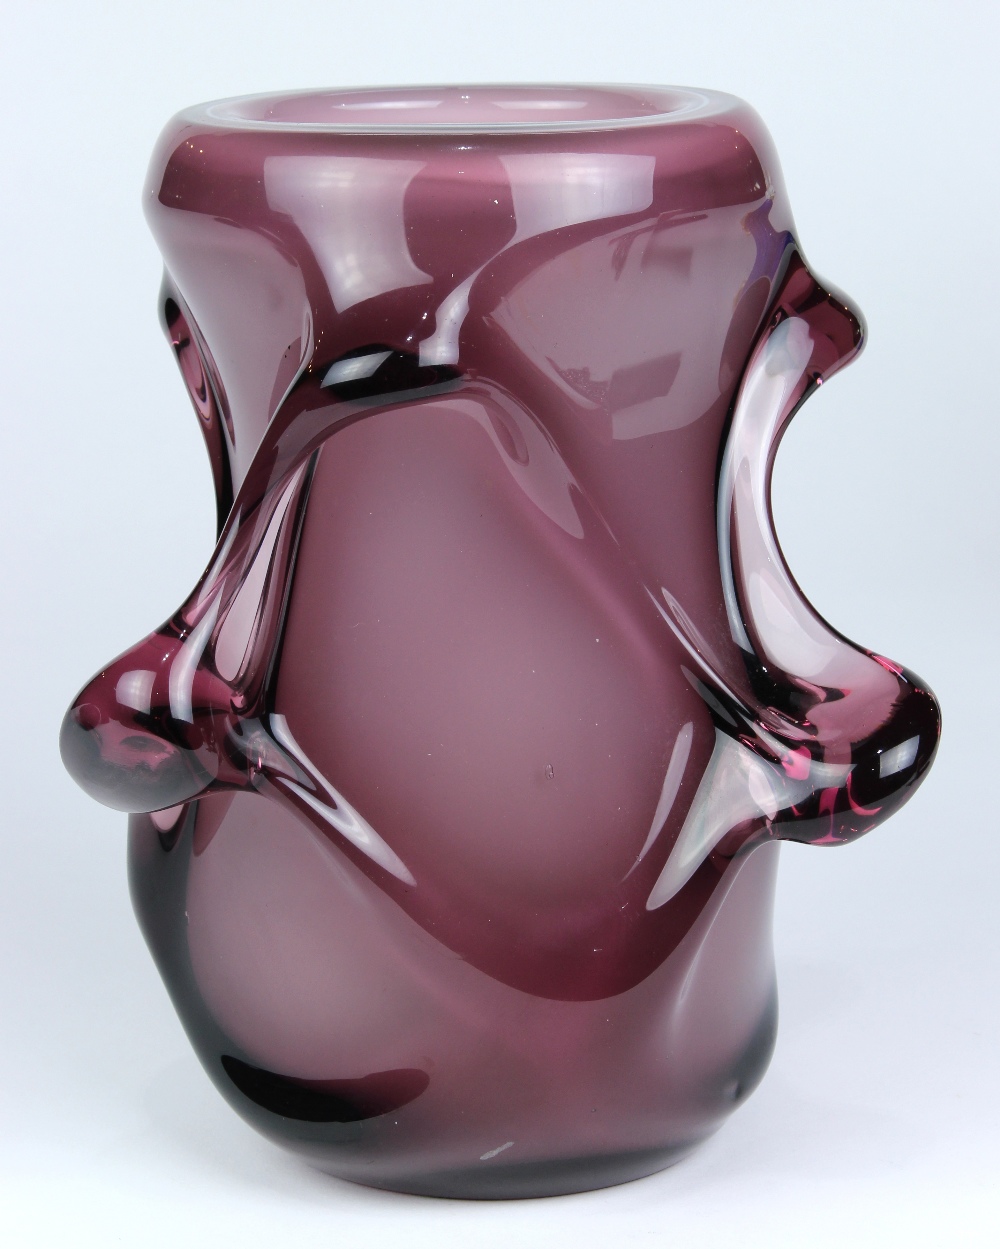 Flavio Poli for Seguso Verti d'Arte "Freeform" series vase, circa 1937, executed in aubergine - Image 2 of 5